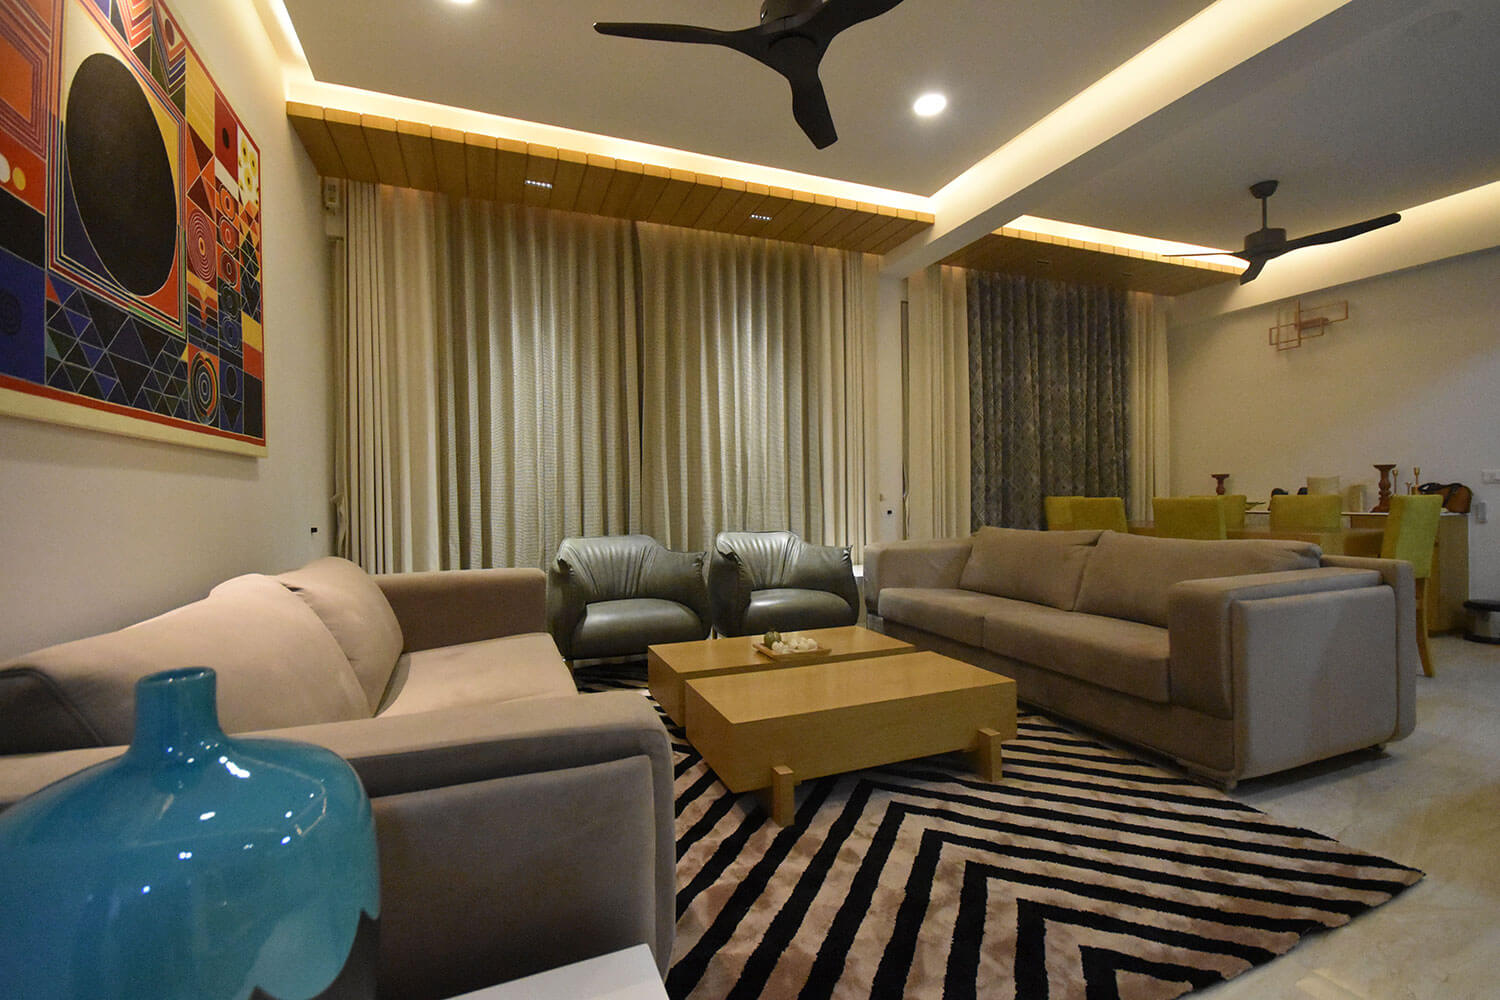 4 BHK Residence Interior at Gala Marvella - Devang Shah Architect